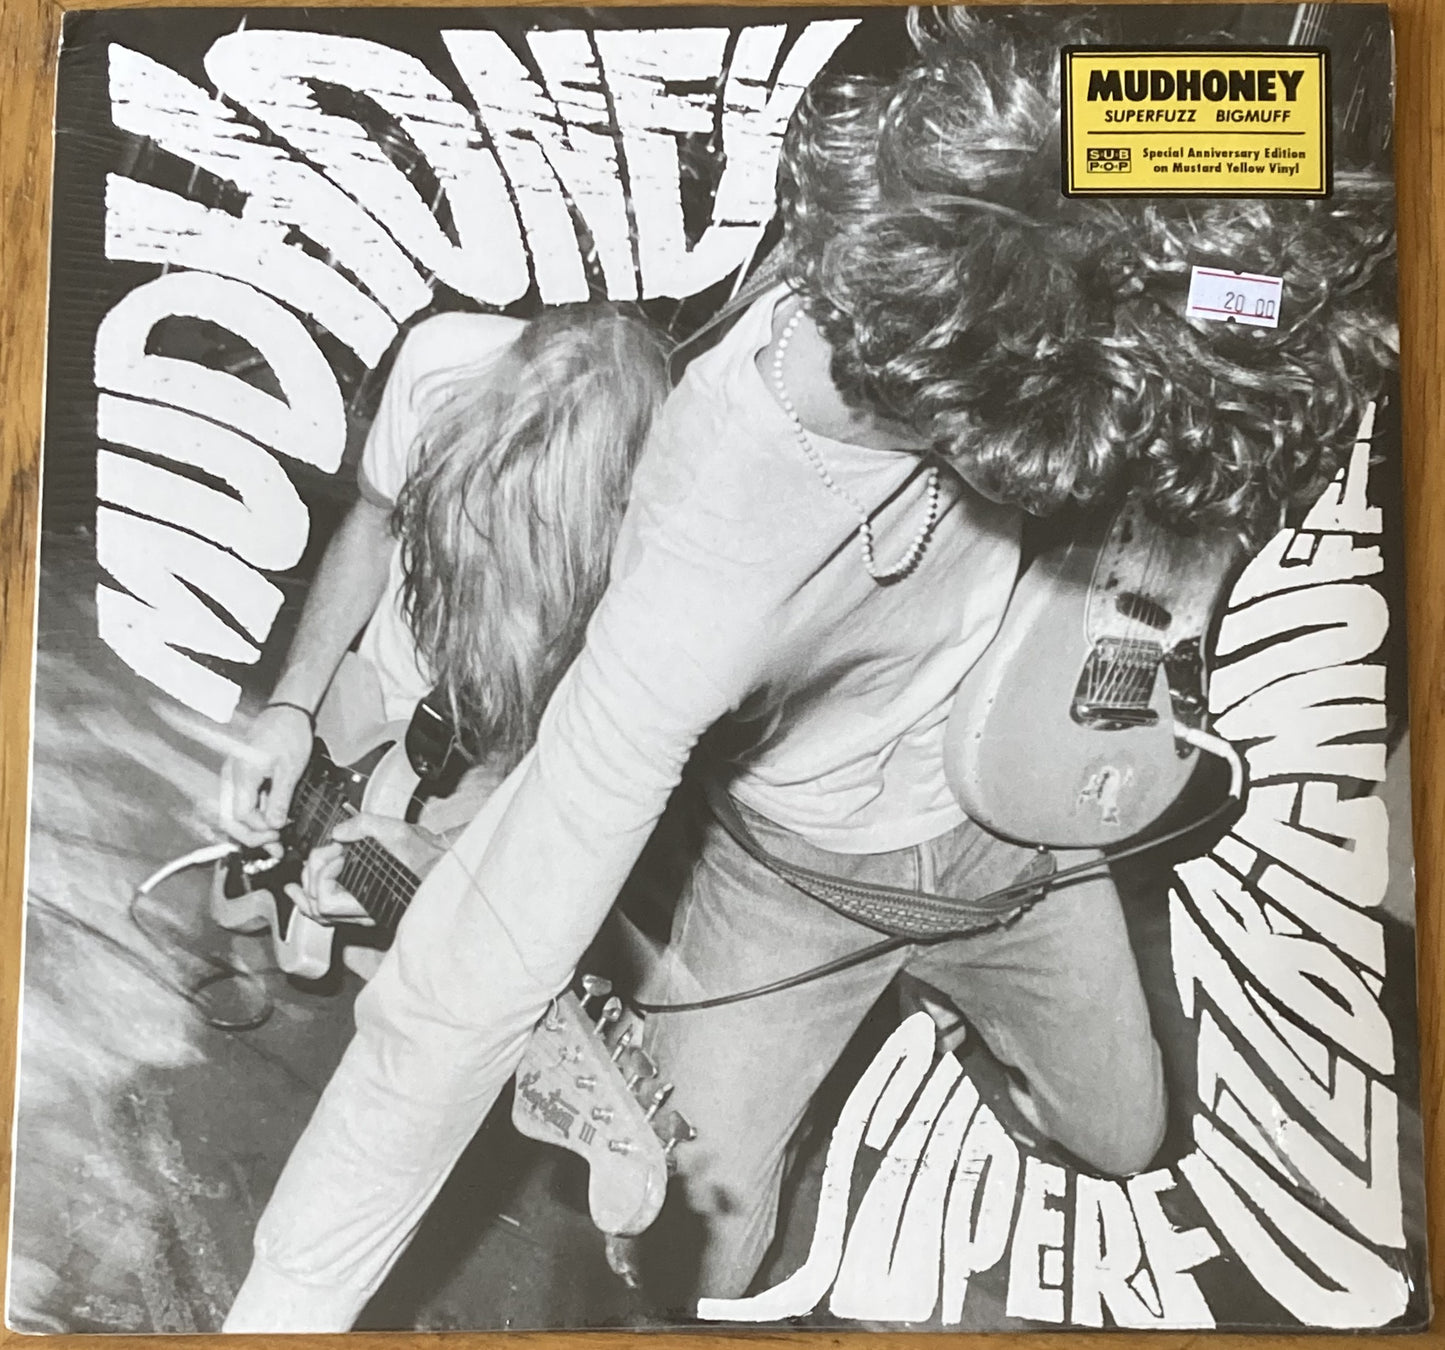 The front of 'Mudhoney - Superfuzz Bigmuff' on vinyl